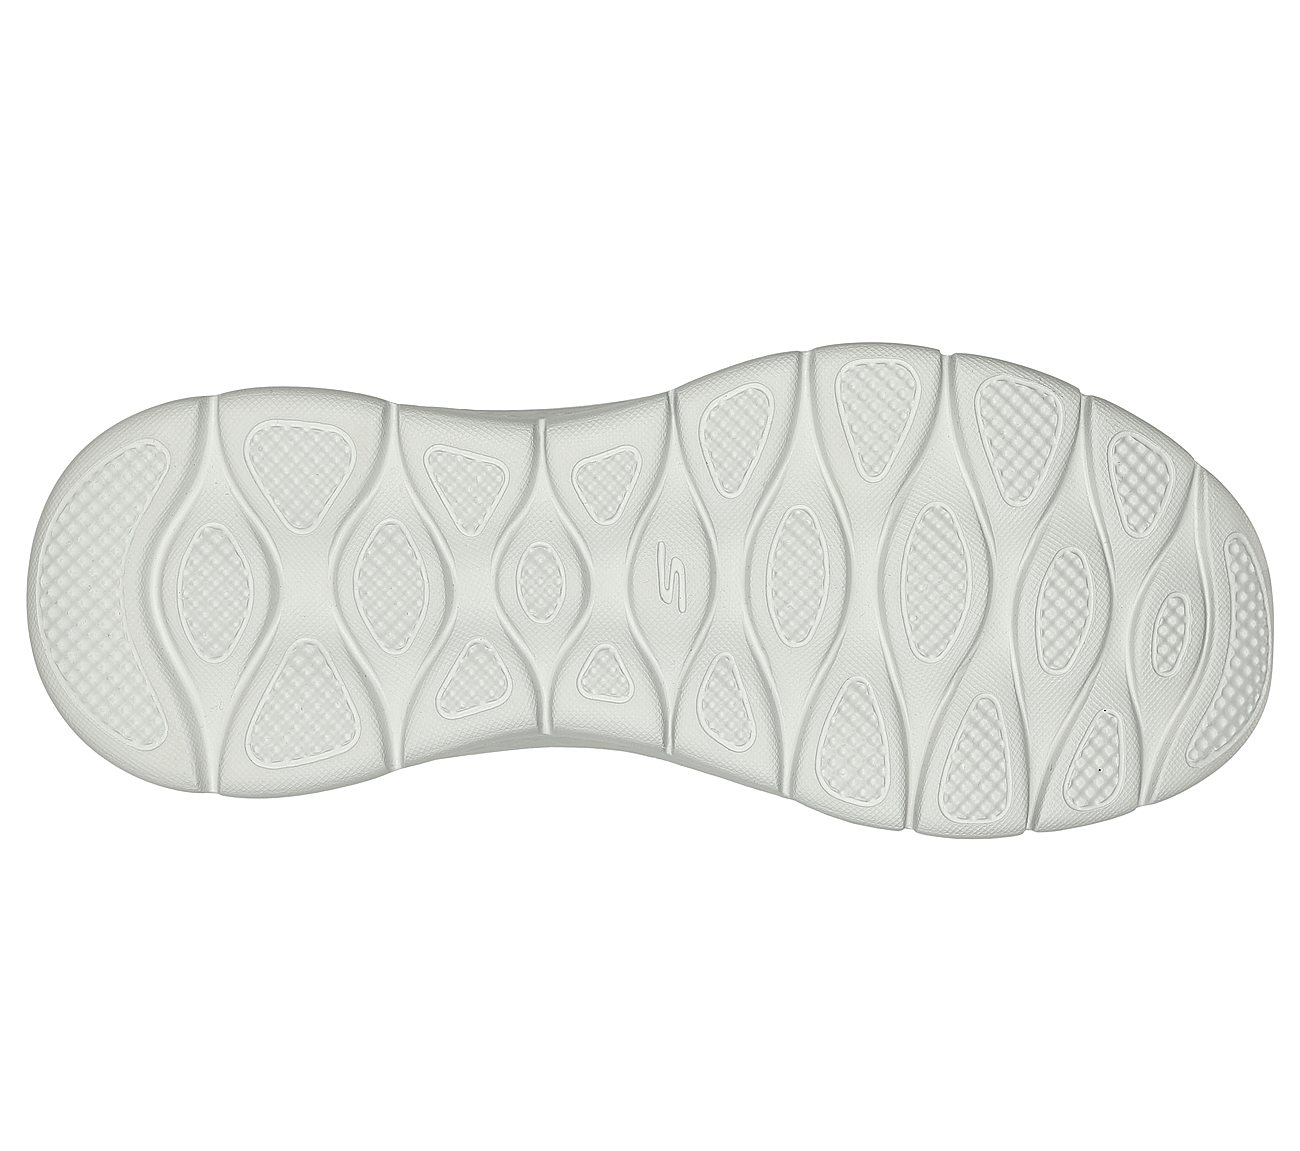 Skechers Navy/White Go Walk-Flex-Vella Womens Slip On Shoes - Style ID ...